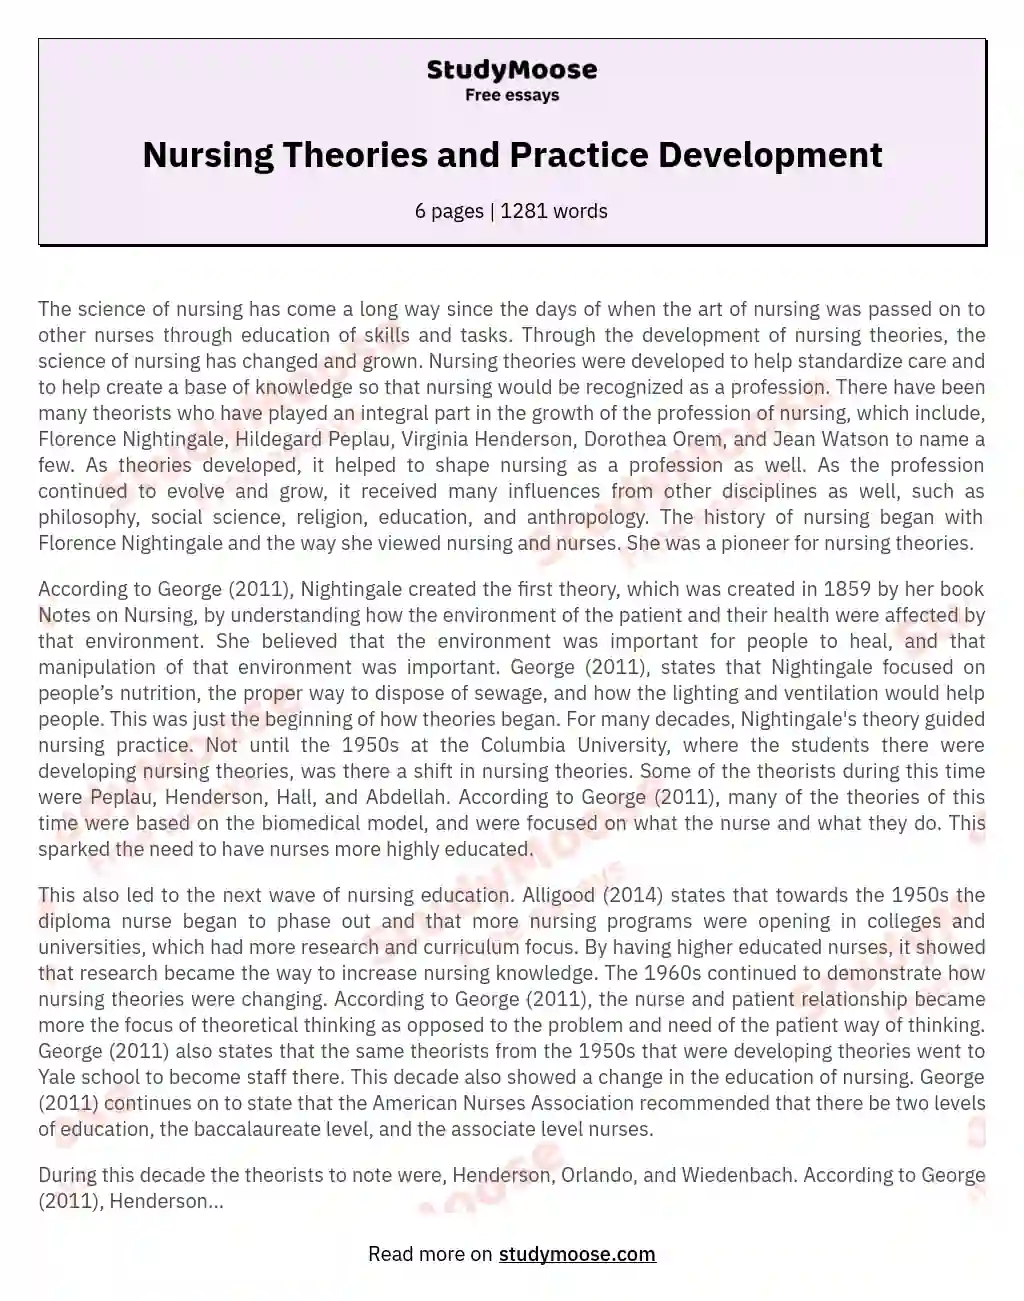 Nursing Theories and Practice Development essay